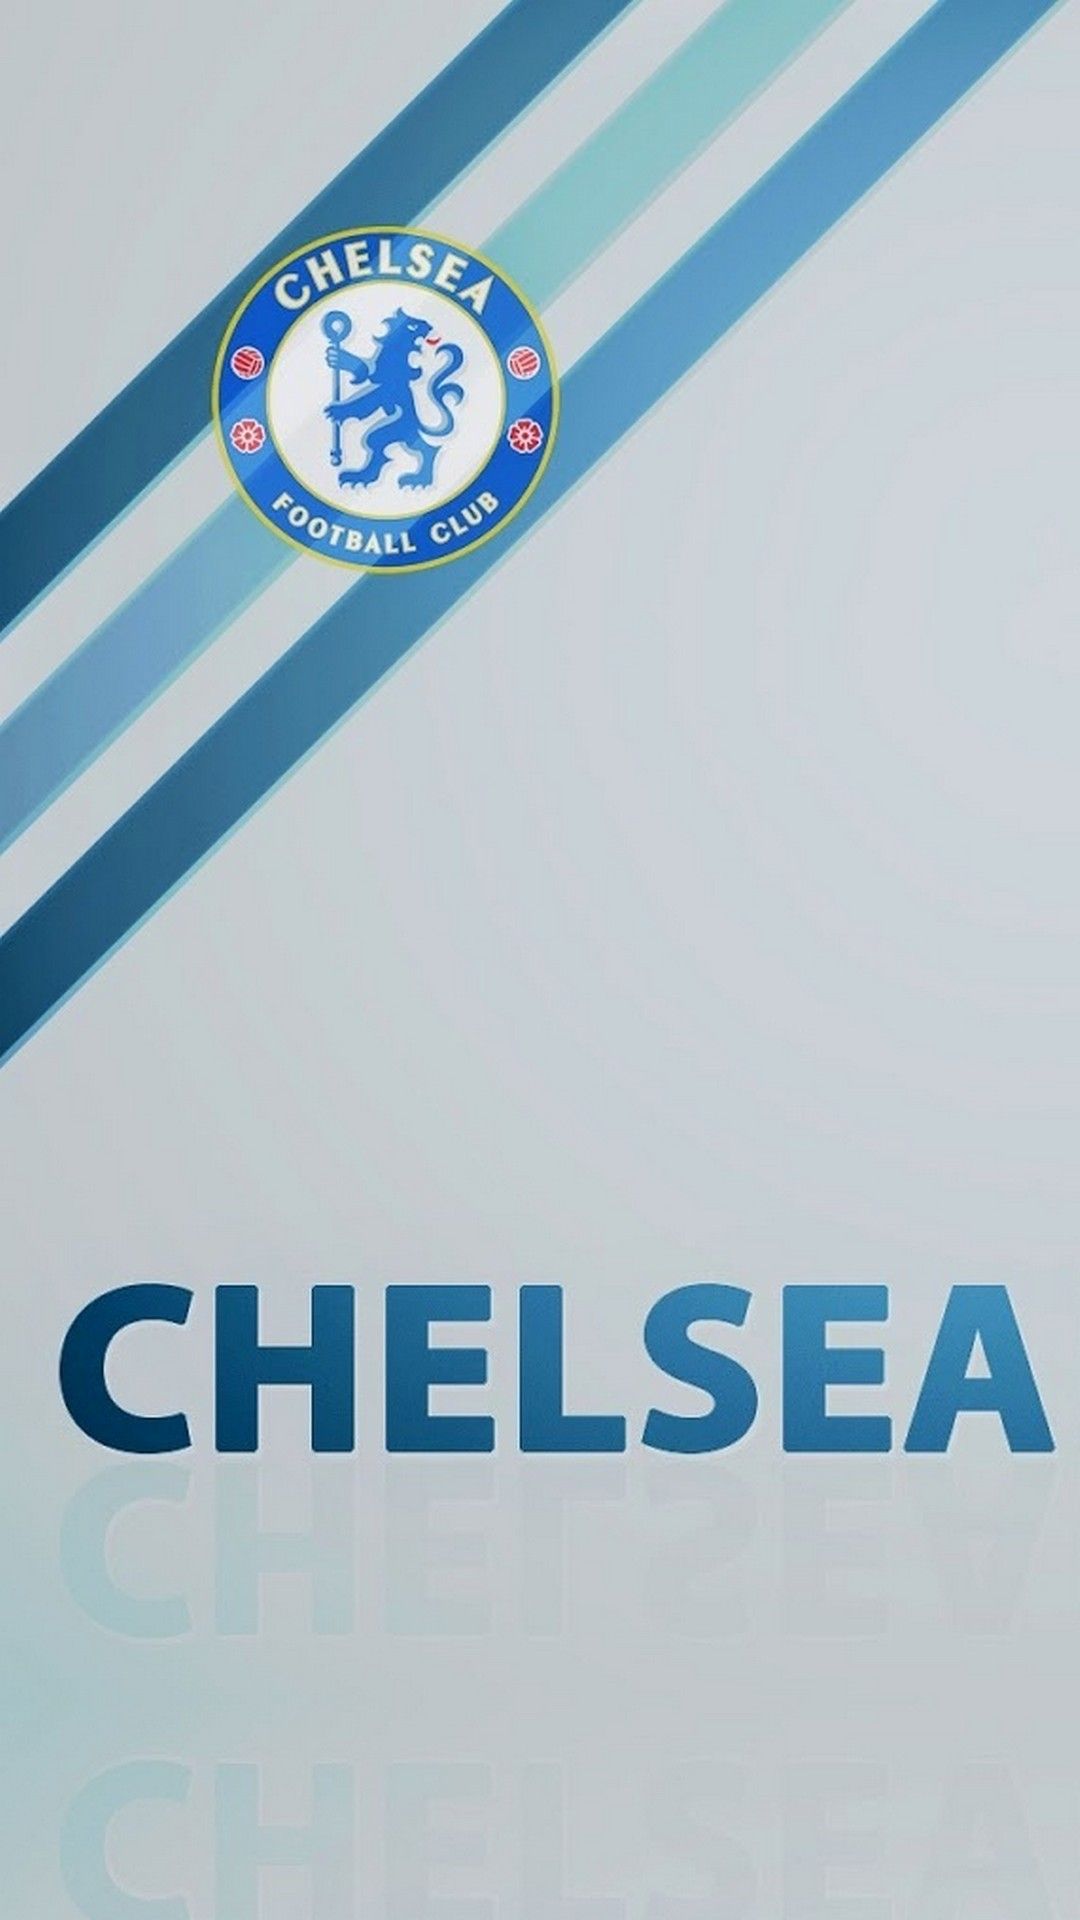 Chelsea Champions League Wallpaper iPhone HD Football Wallpaper